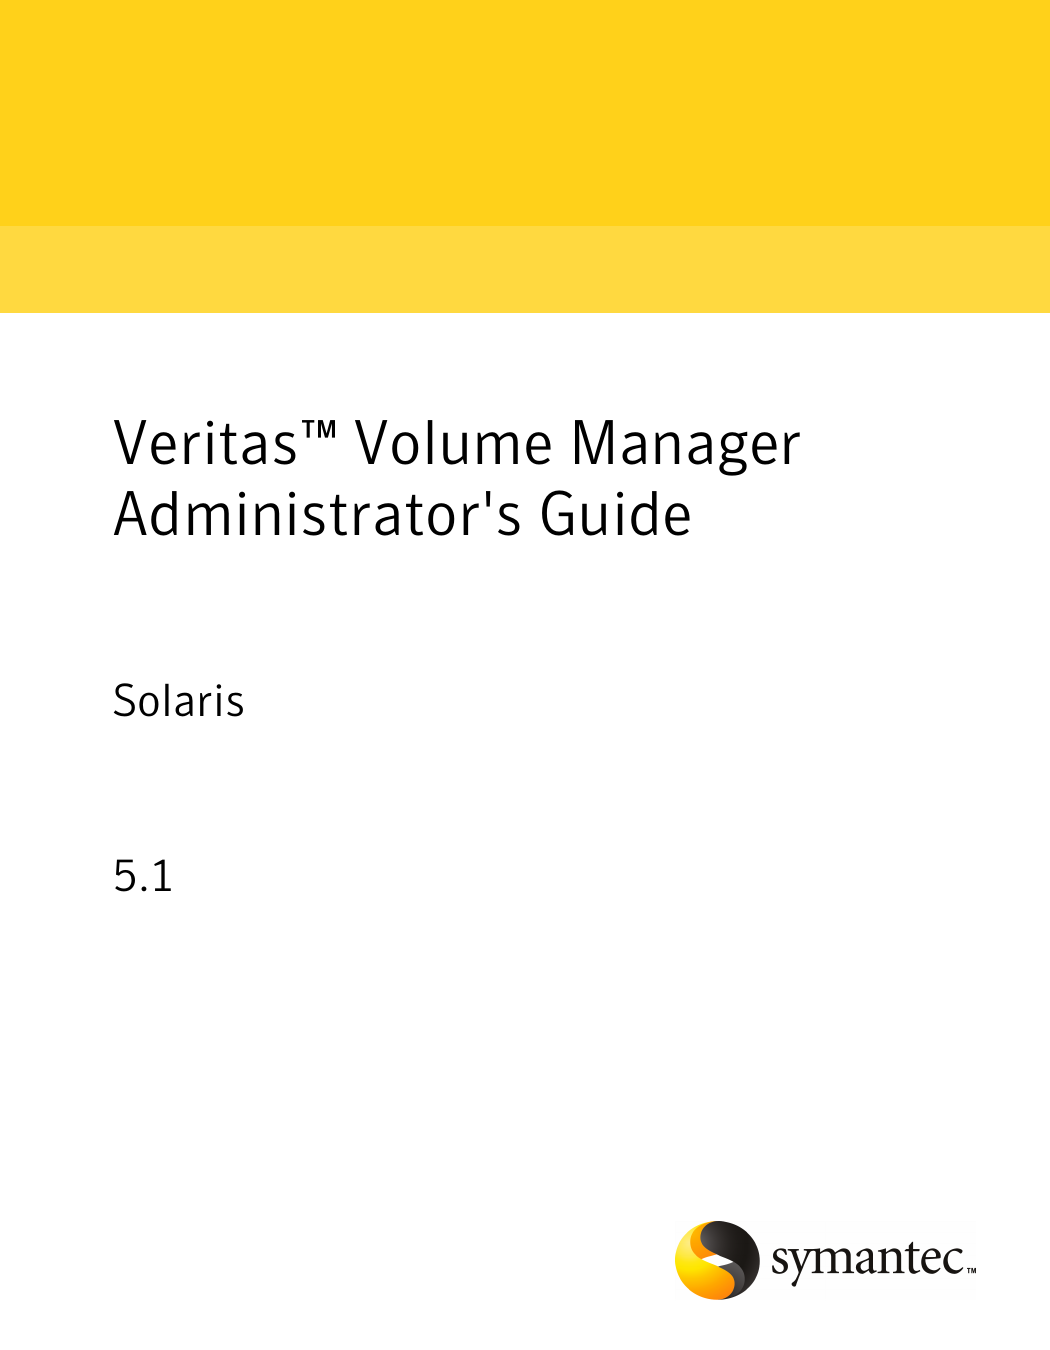 veritas volume manager software download for solaris